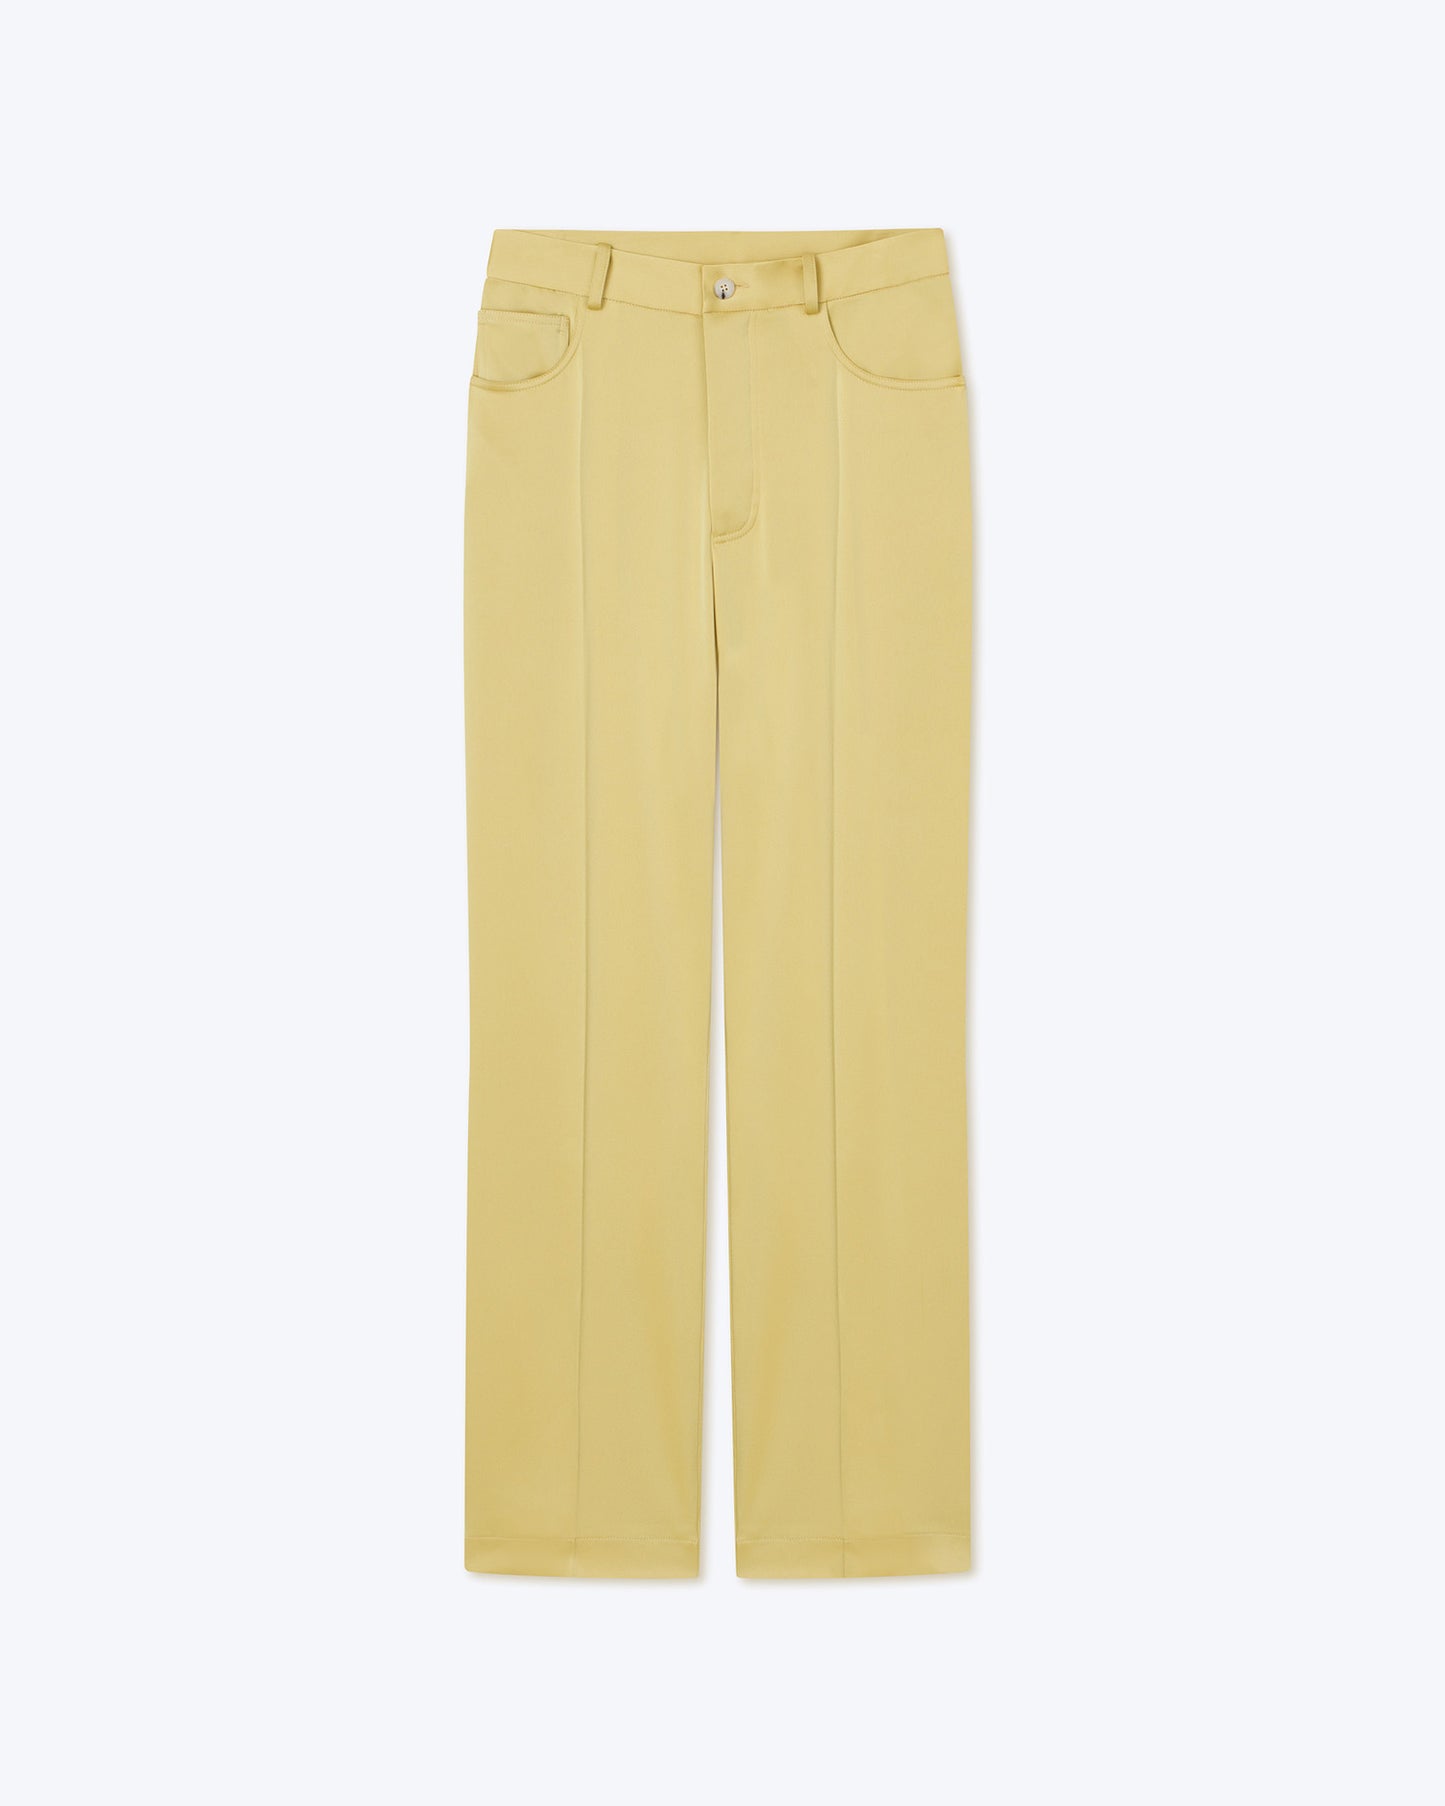 Macen - Slip Satin Pants - Yellow